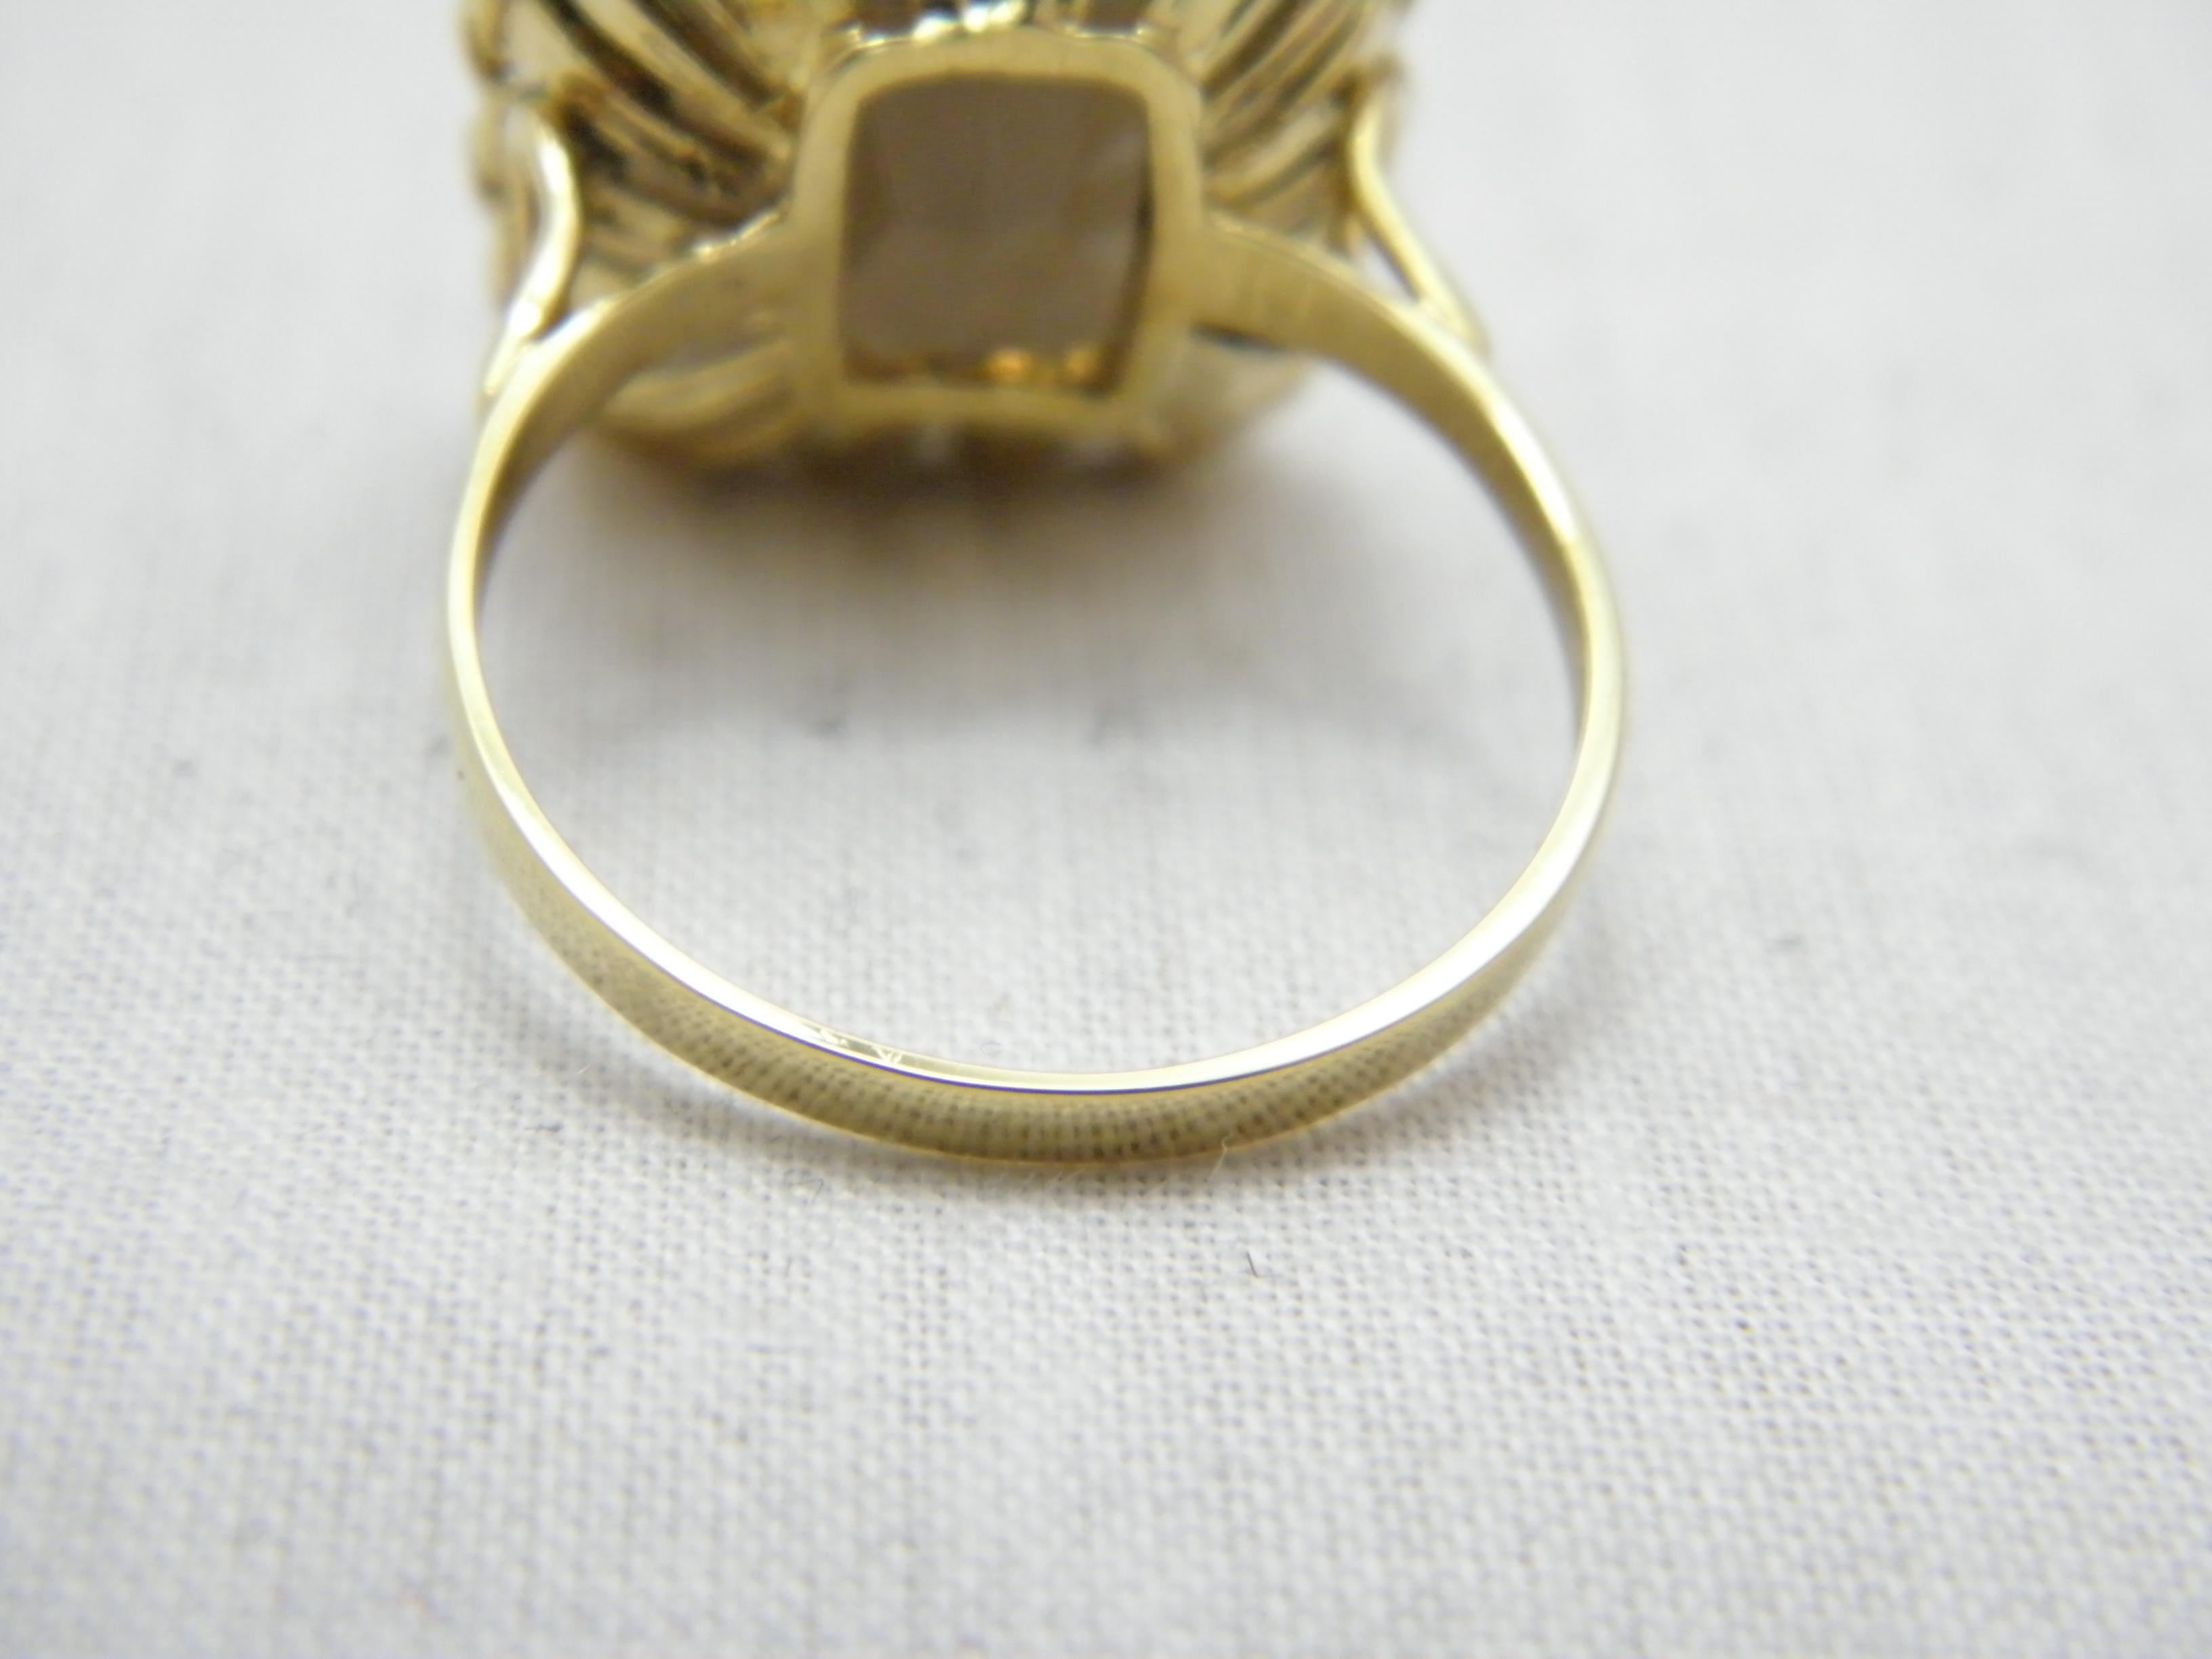 Women's or Men's Vintage Smoky Quartz 18ct Gold Statement Signet Ring Size Q 8.25 750 Purity For Sale